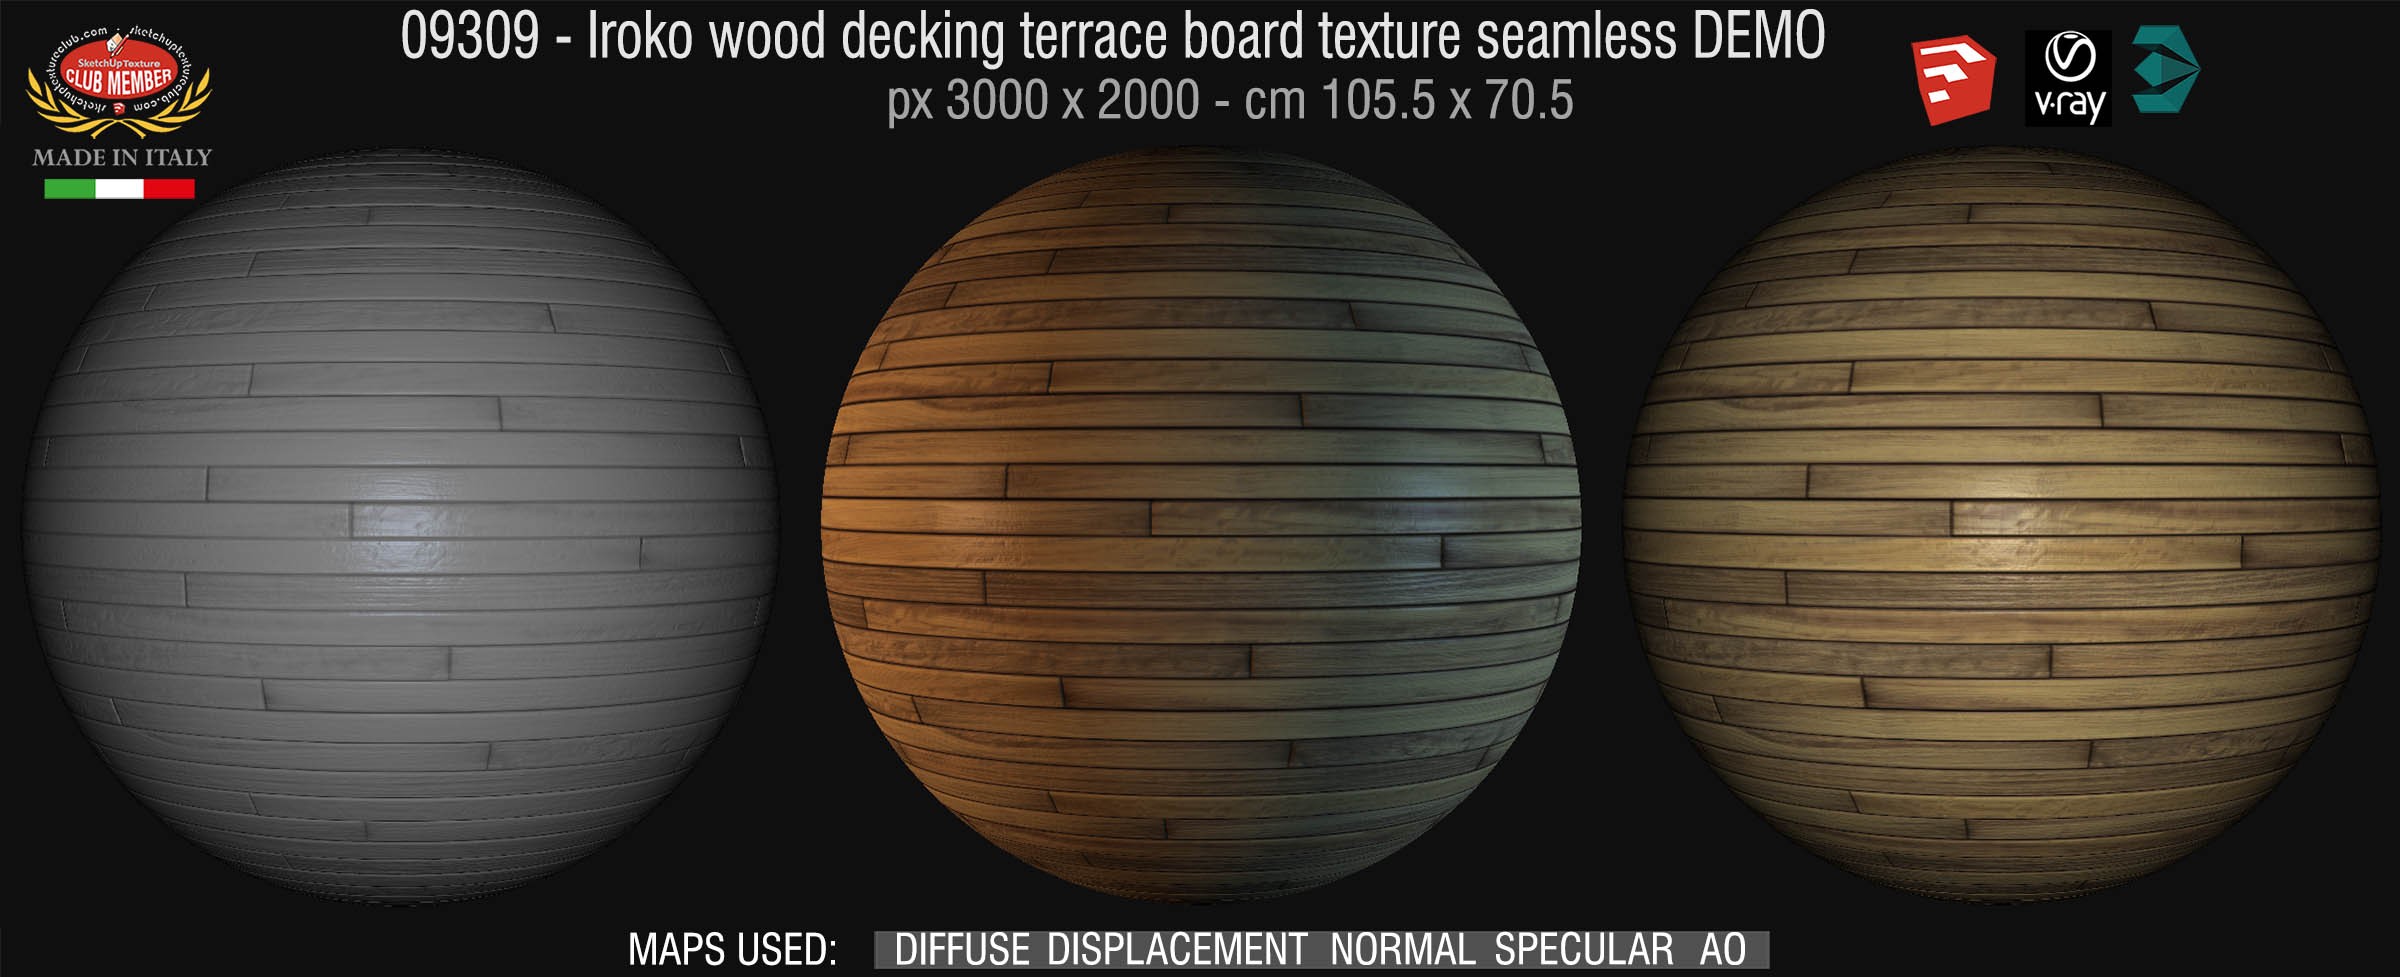 09309 HR  Iroko wood decking terrace board texture seamless + maps DEMO